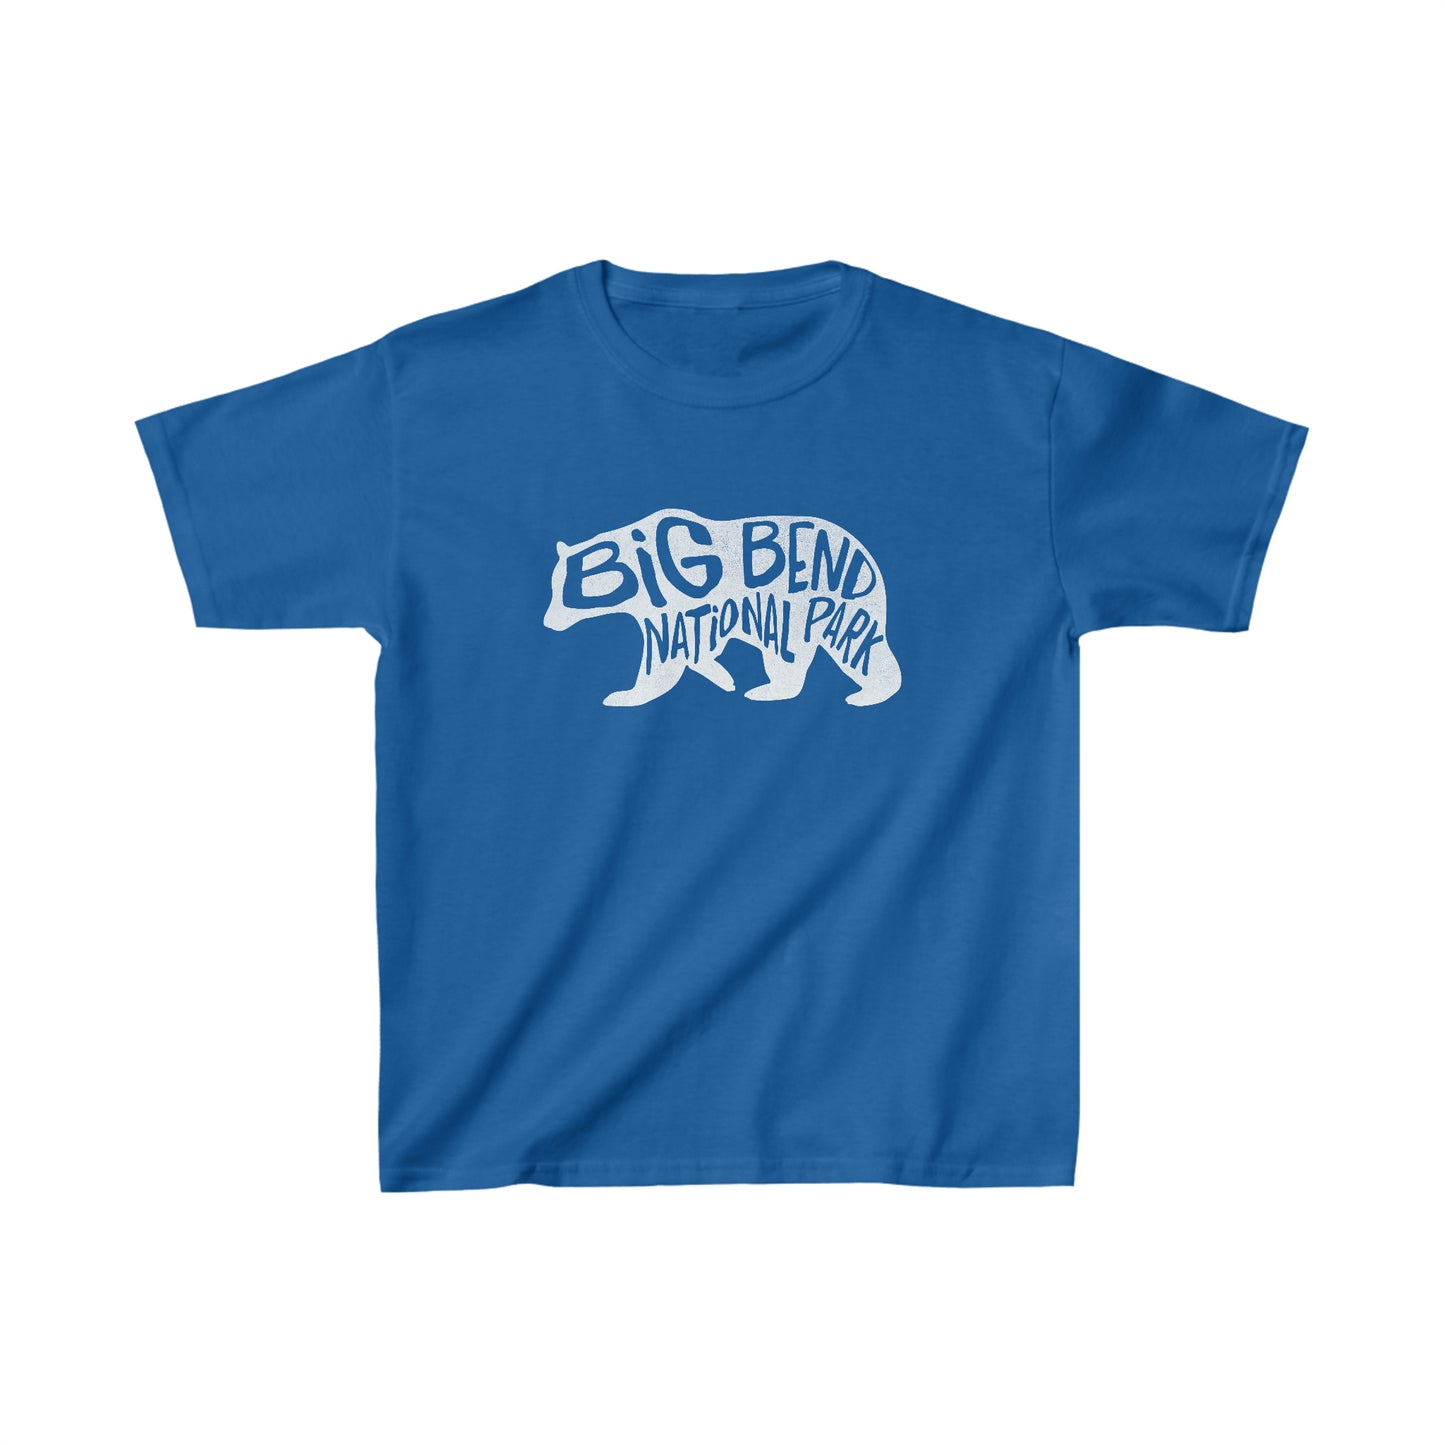 Big Bend National Park Child T-Shirt - Bear Design